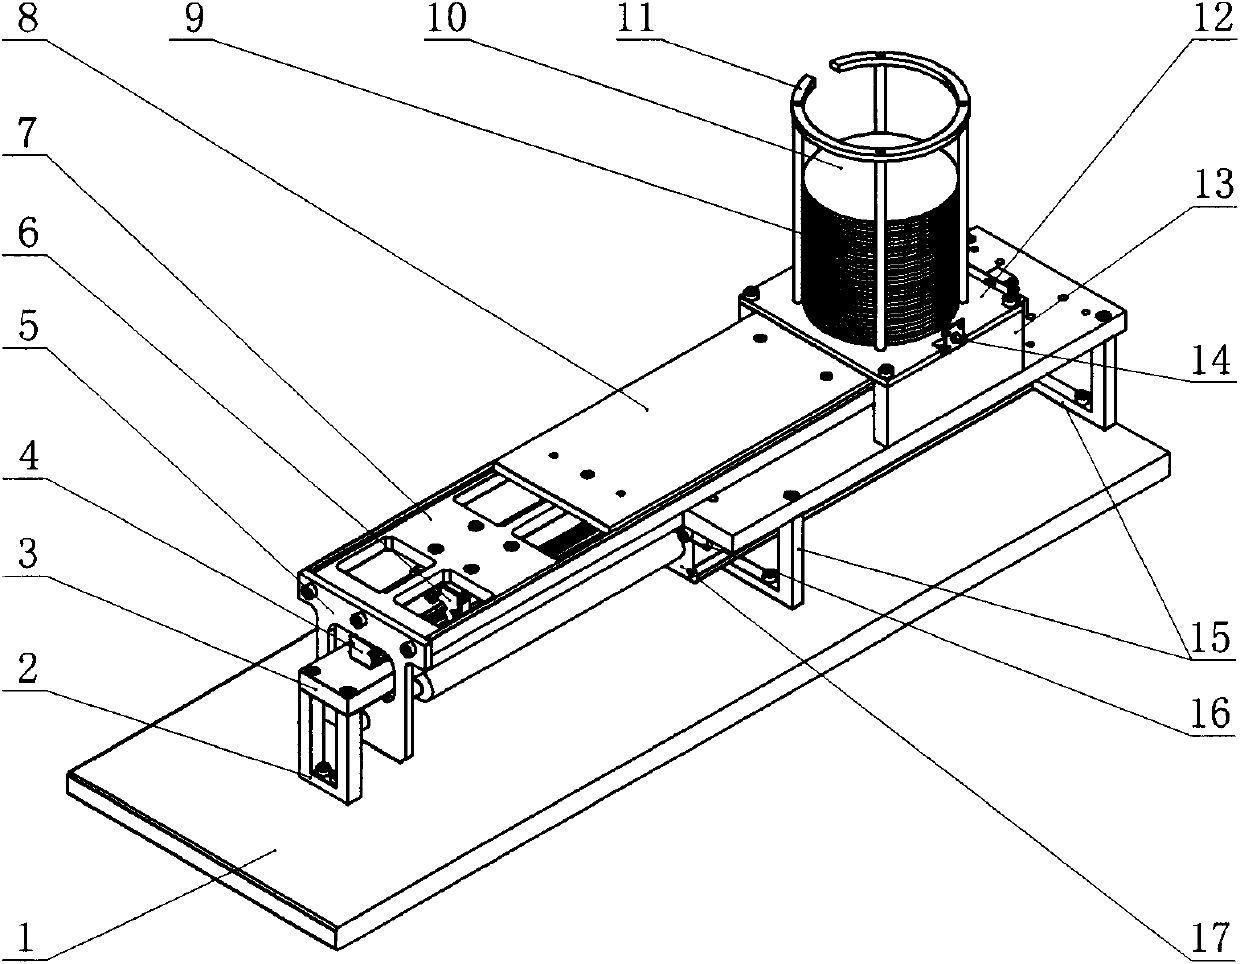 Round sheet automatic feeding mechanism